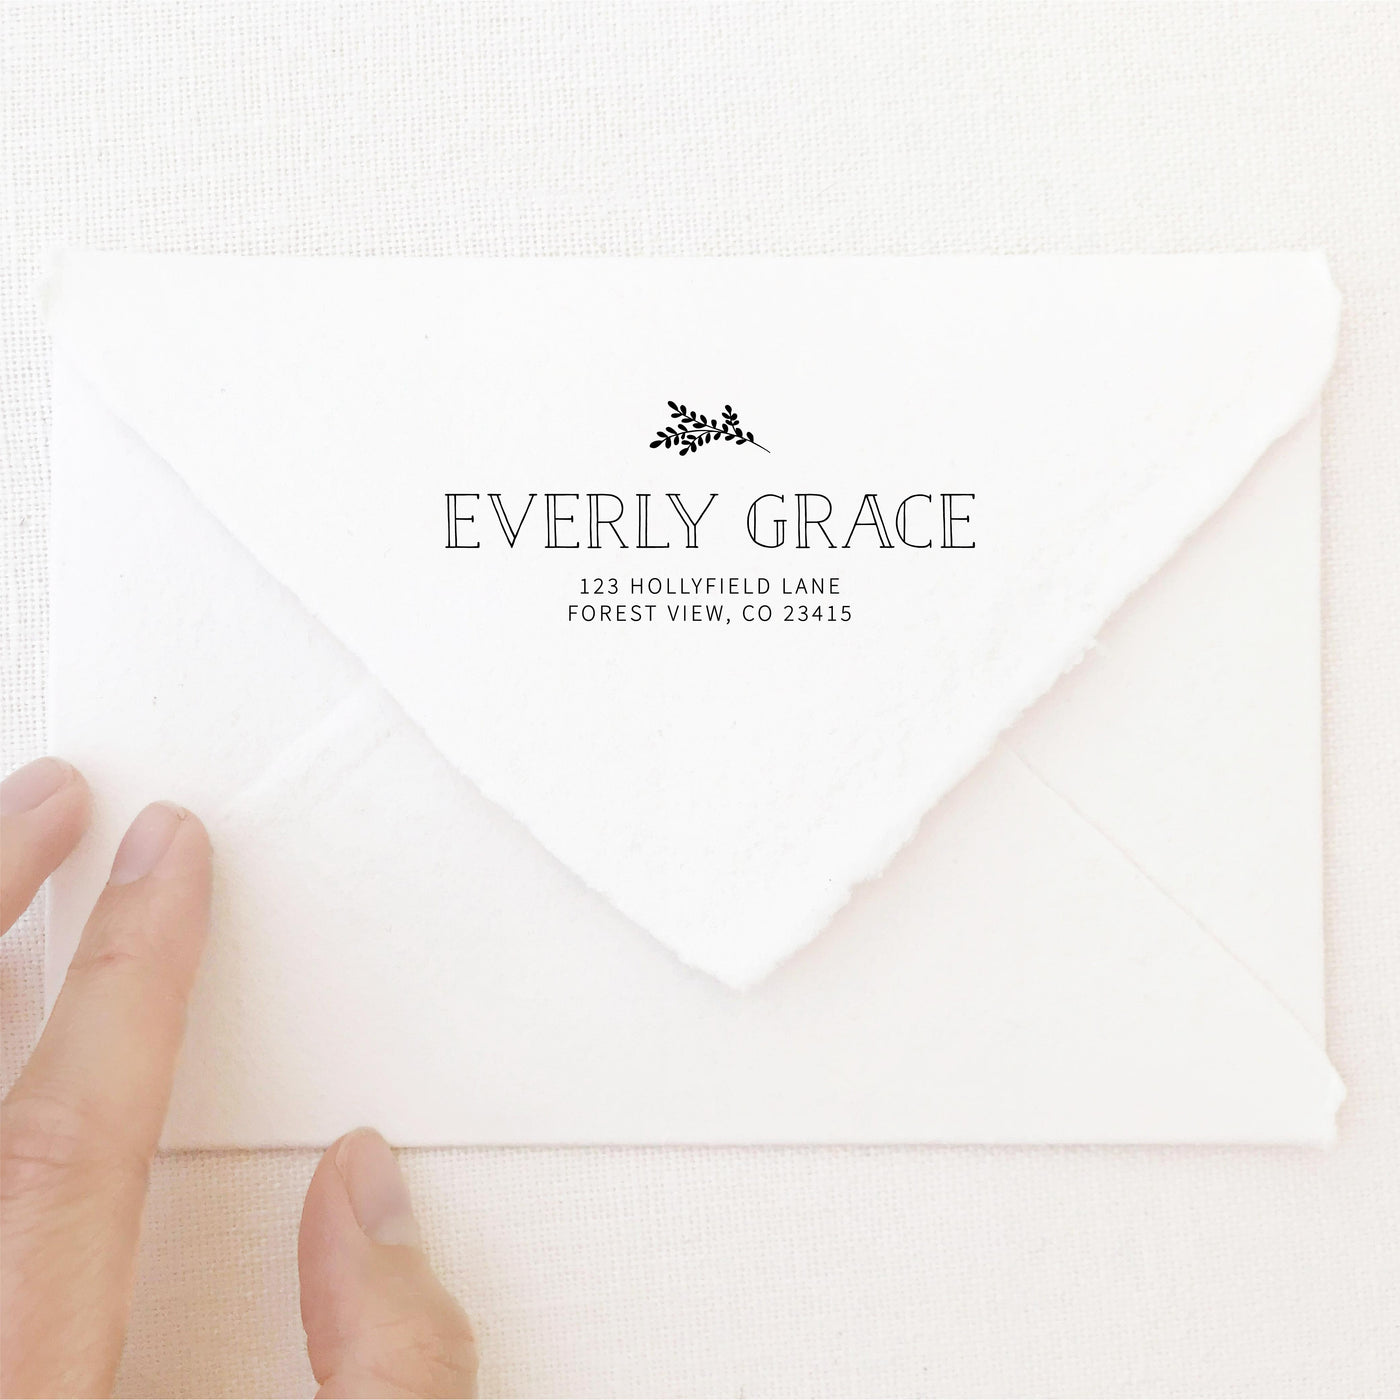 Everly Classic Botanical Return Address Rubber Stamp | Brand Packaging Fine Art Handmade Deckled Edge Paper Wedding Stationery Invitations Envelopes | Heirloom Seals